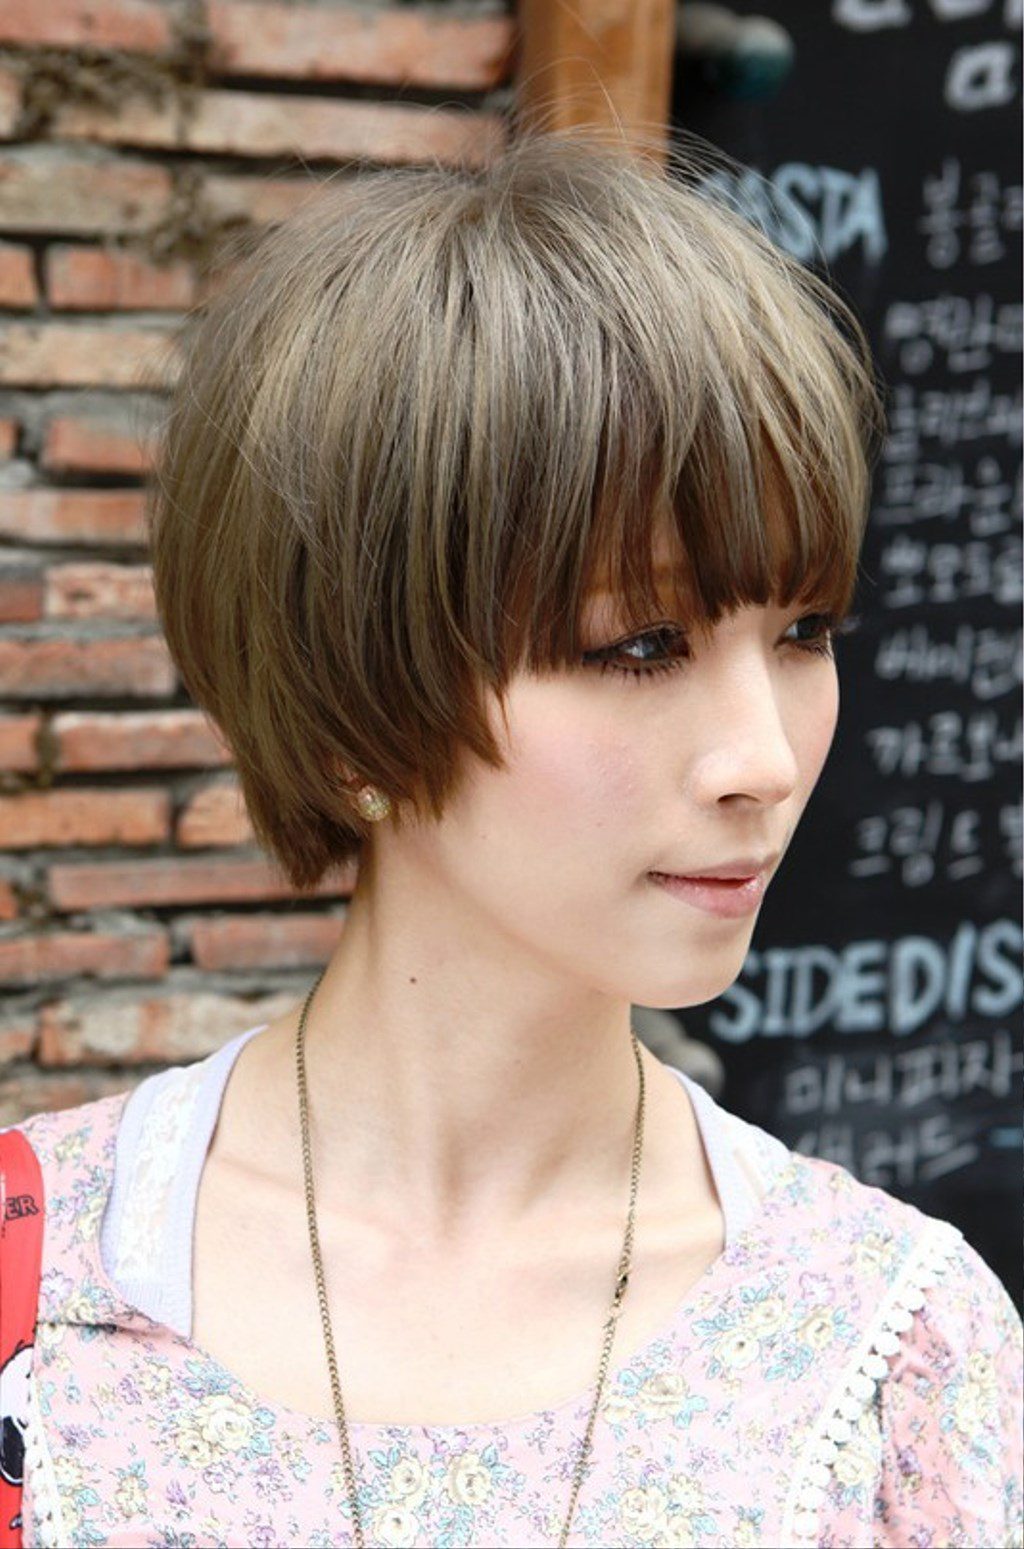 Short Japanese Sleek Hairstyle With Blunt Bangs1